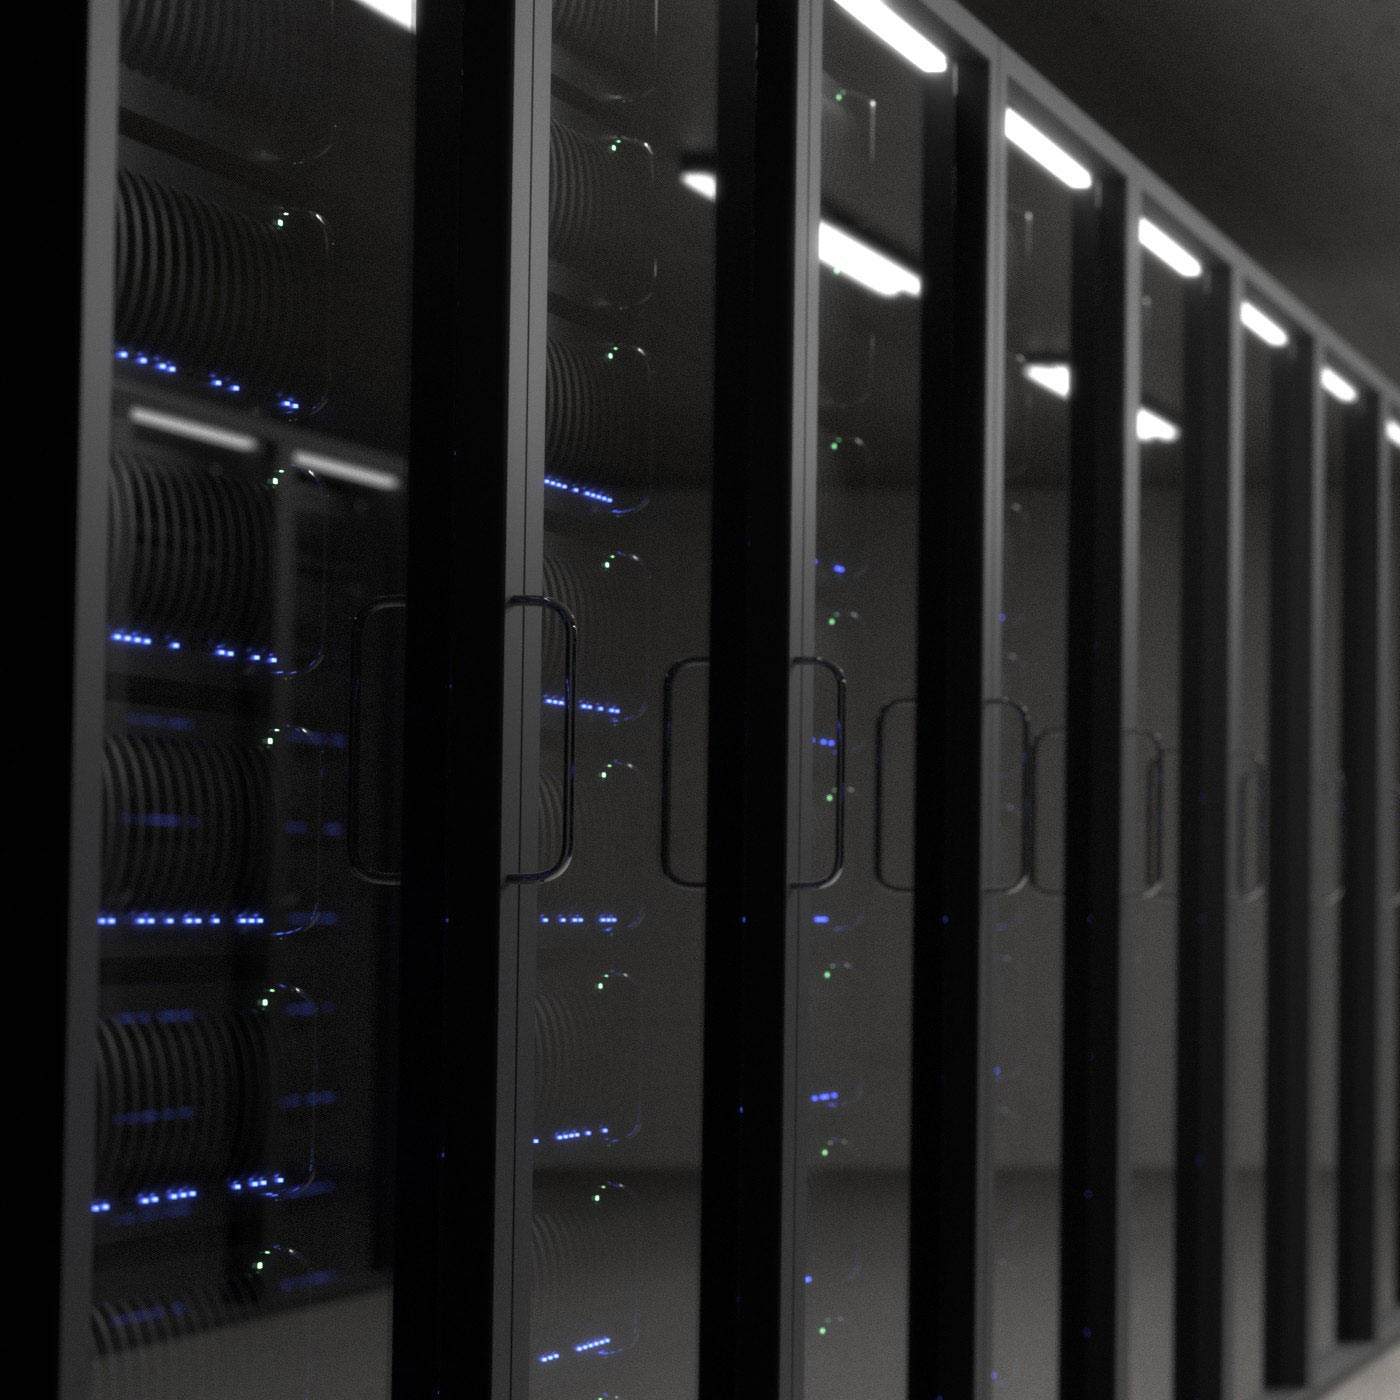 View of server racks in a data center.